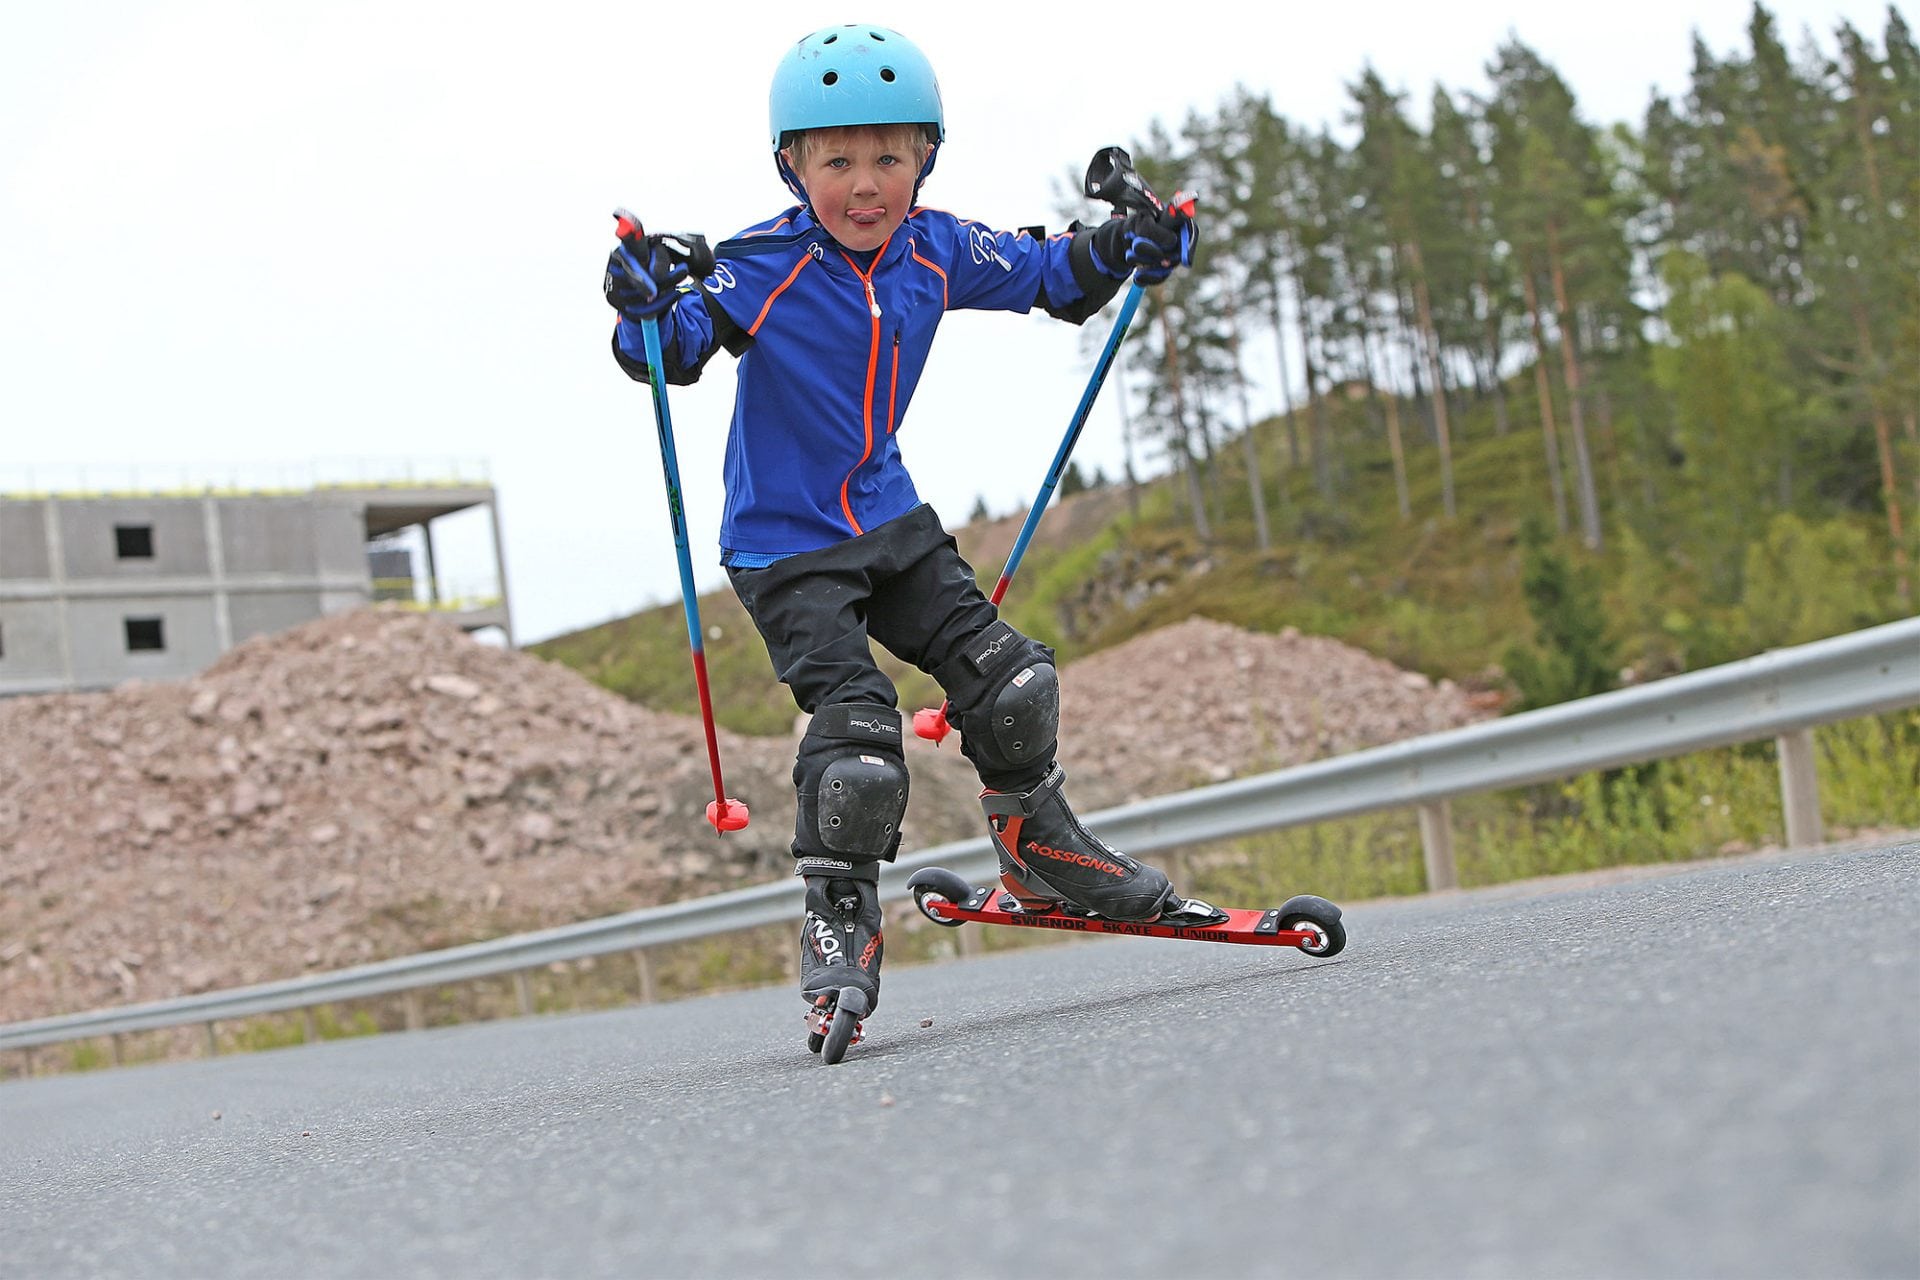 A lighter skate rollerski for kids.